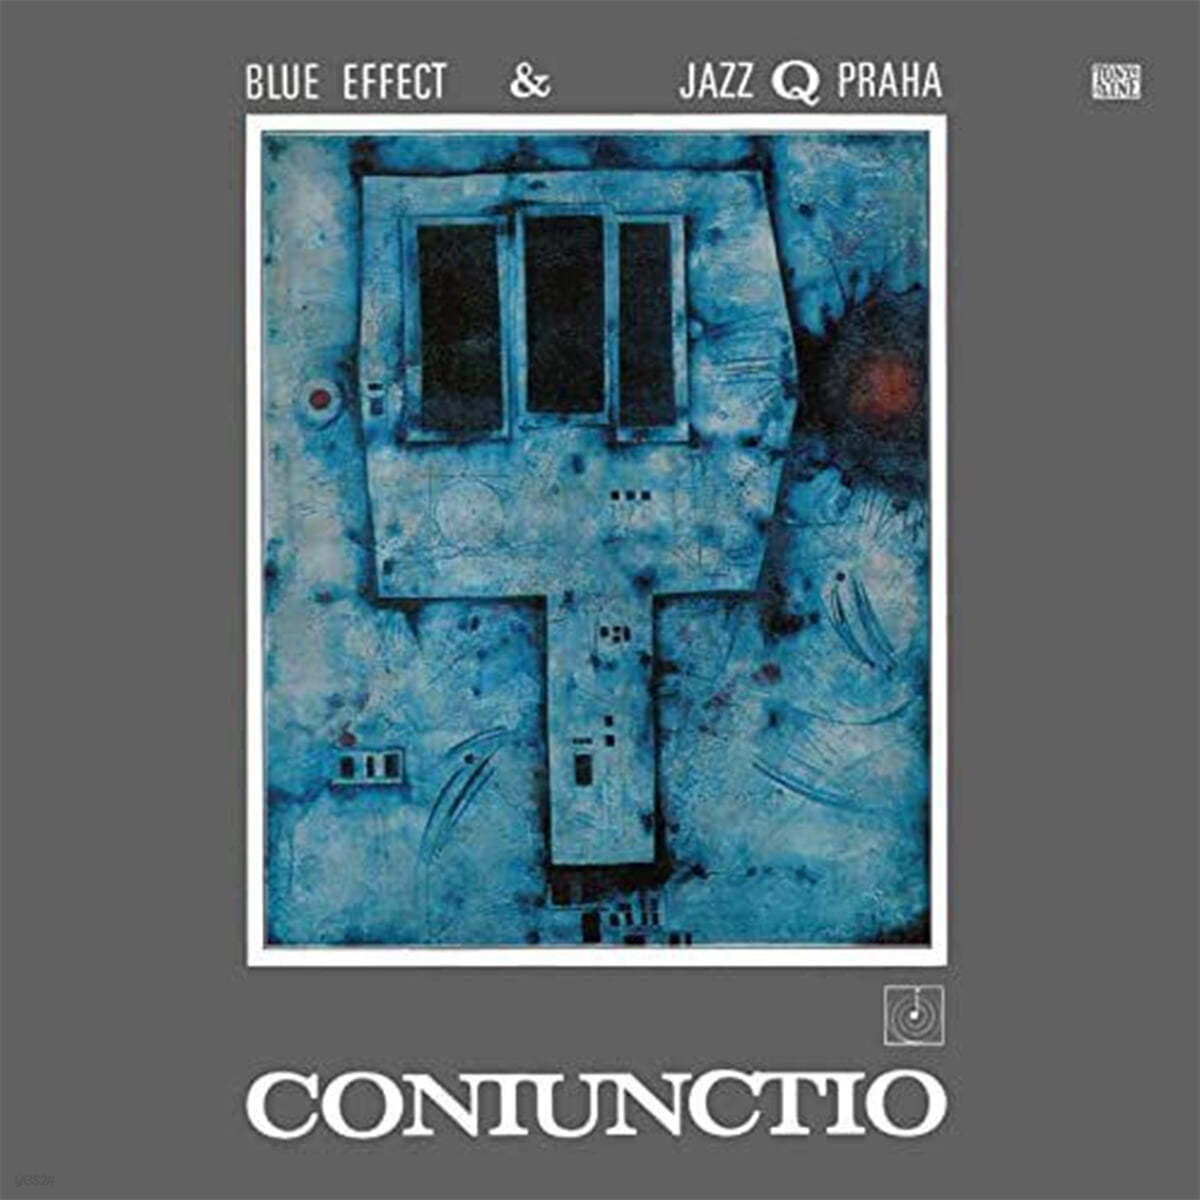 Blue Effect & Jazz Q Praha (블루 이팩트 앤 재즈 큐 프라하) - Coniunctio (1970)